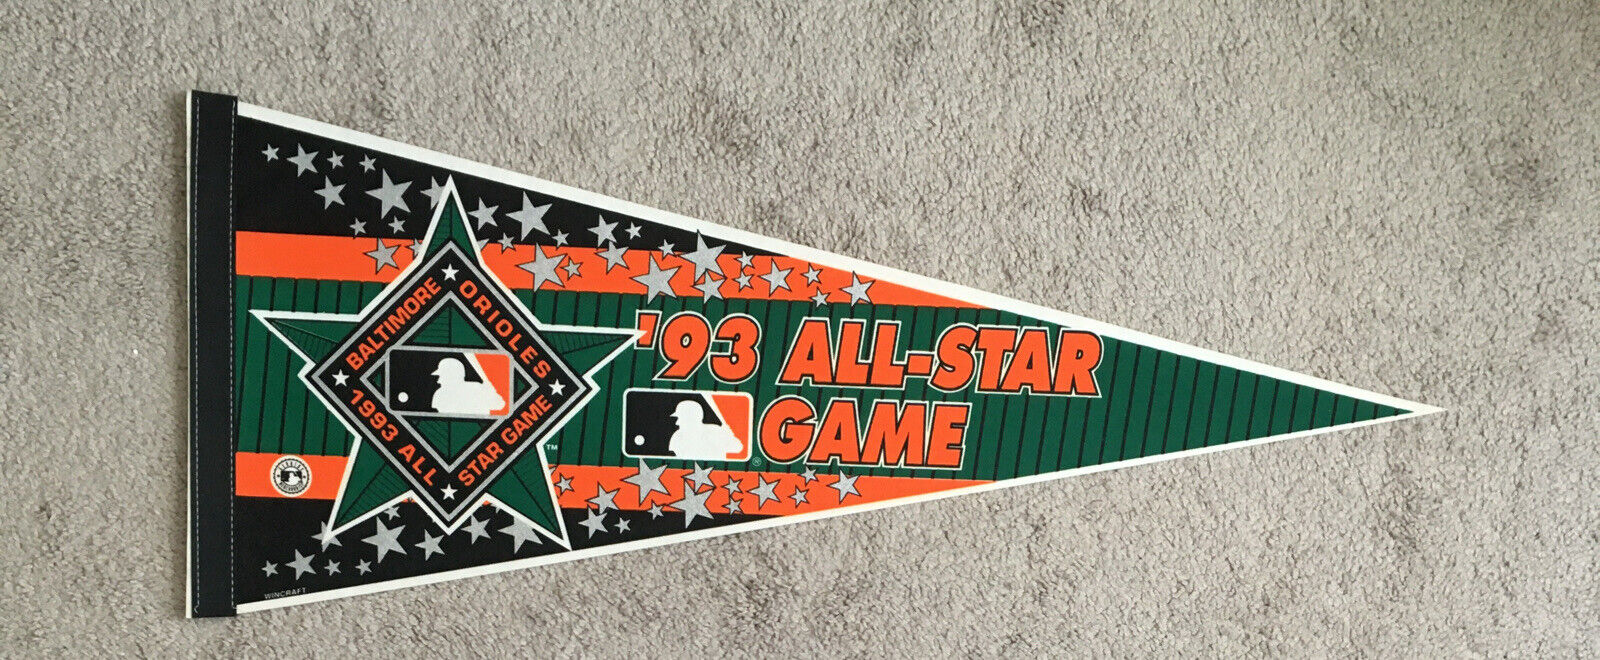 Baltimore Orioles MLB All Star Game 1993 Vintage Licensed Full Size Pennant Flag